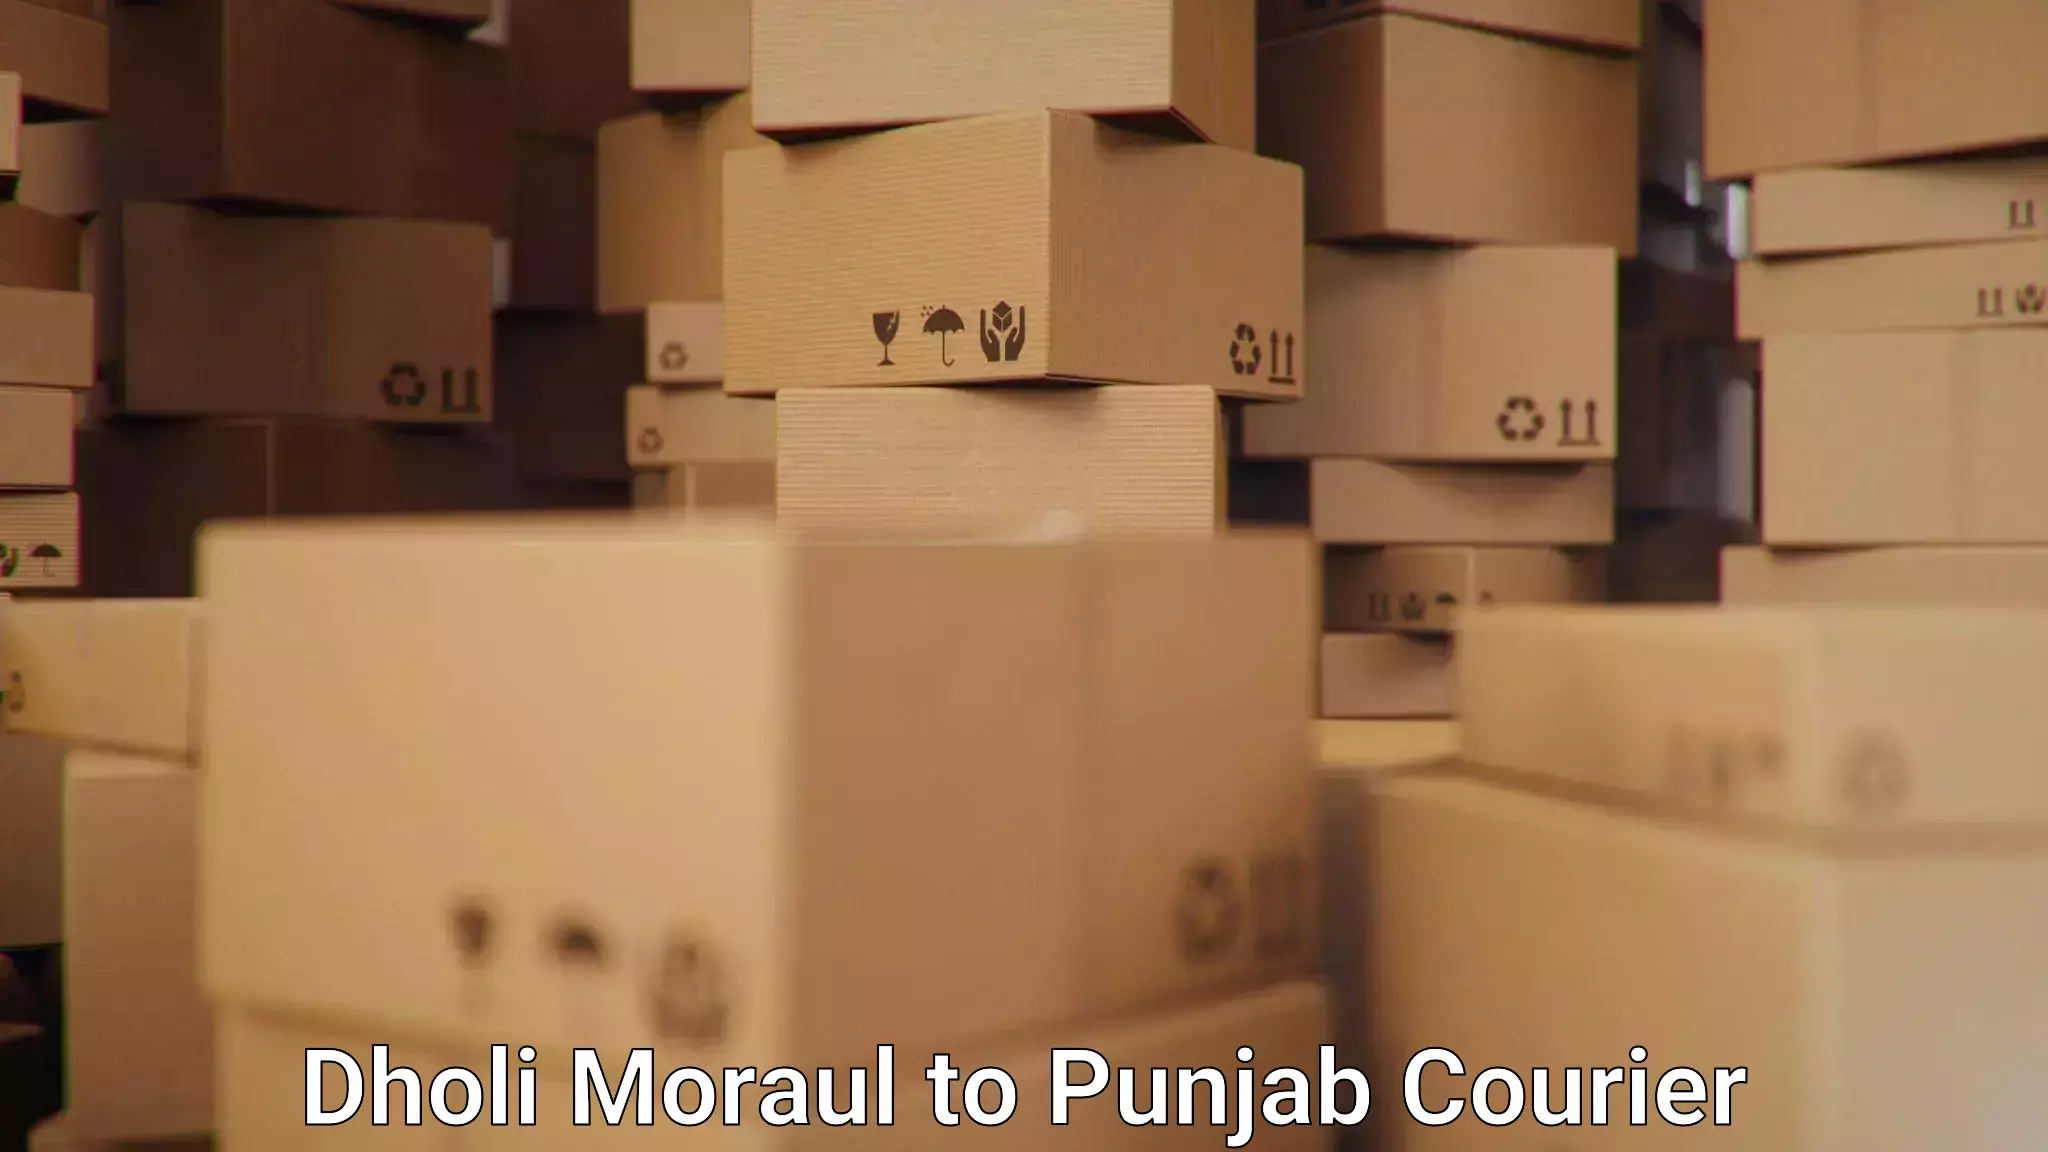 Next-day delivery options Dholi Moraul to Kotkapura